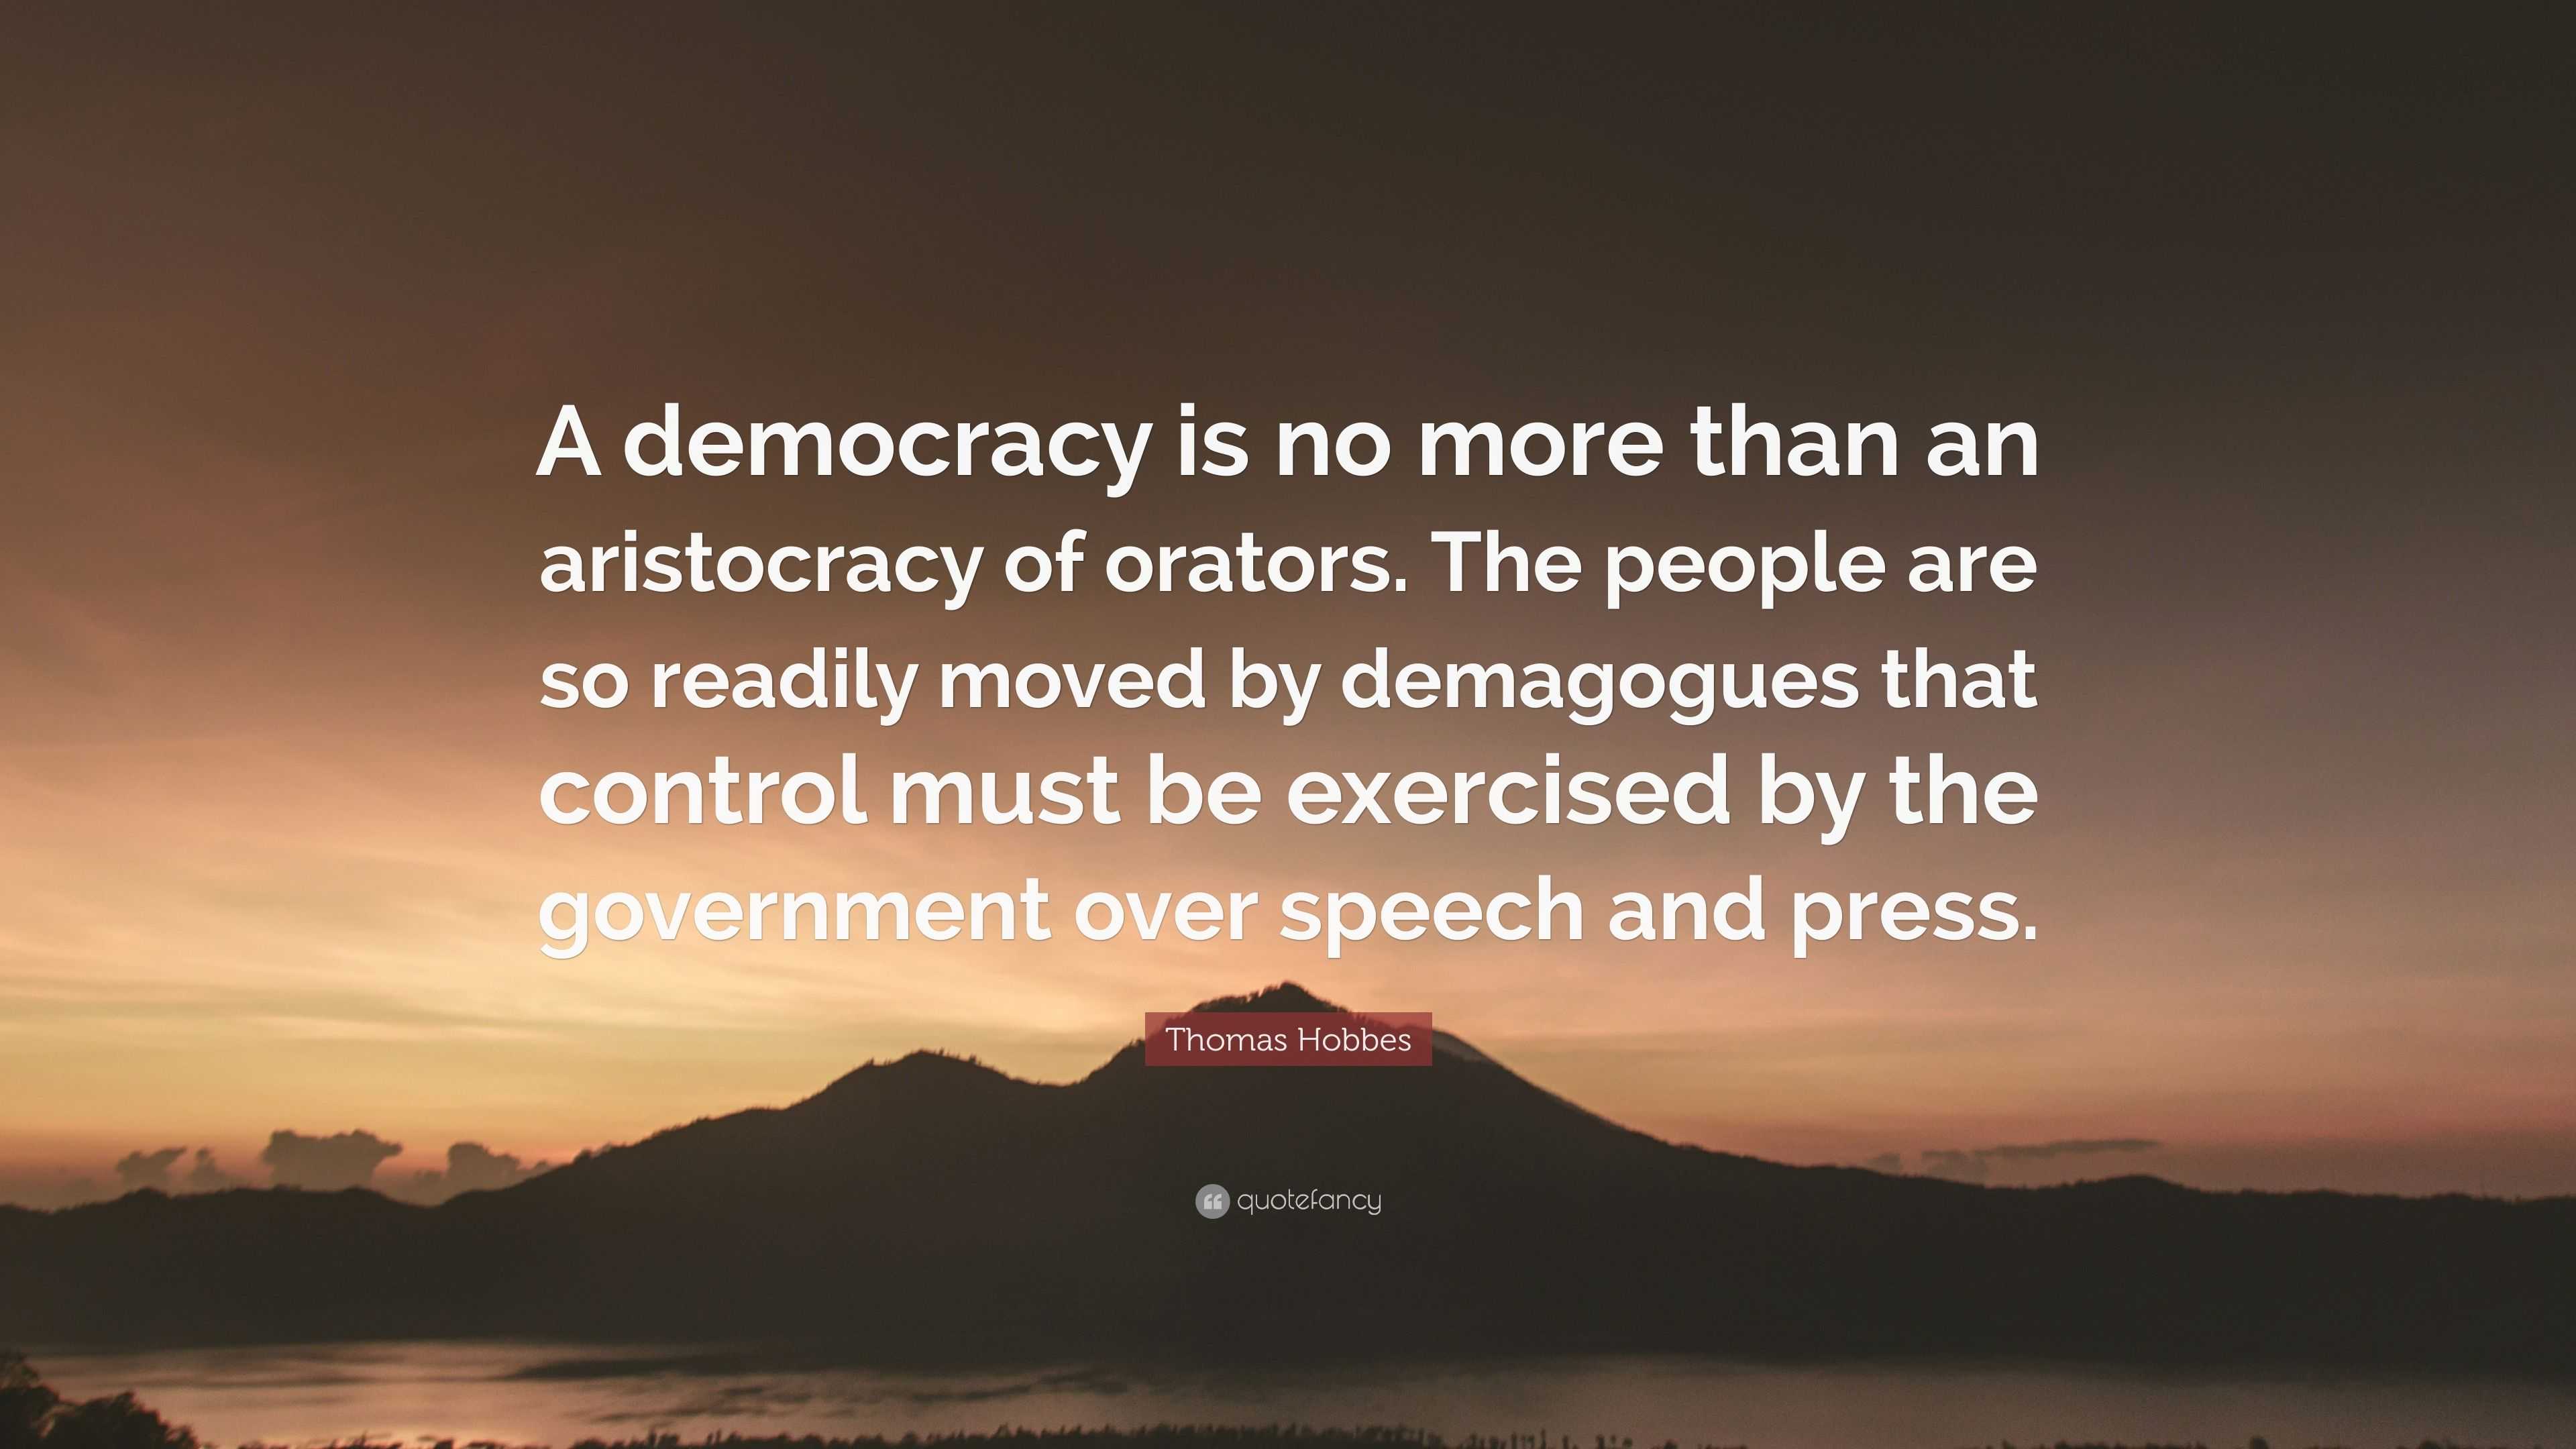 hobbes and democracy